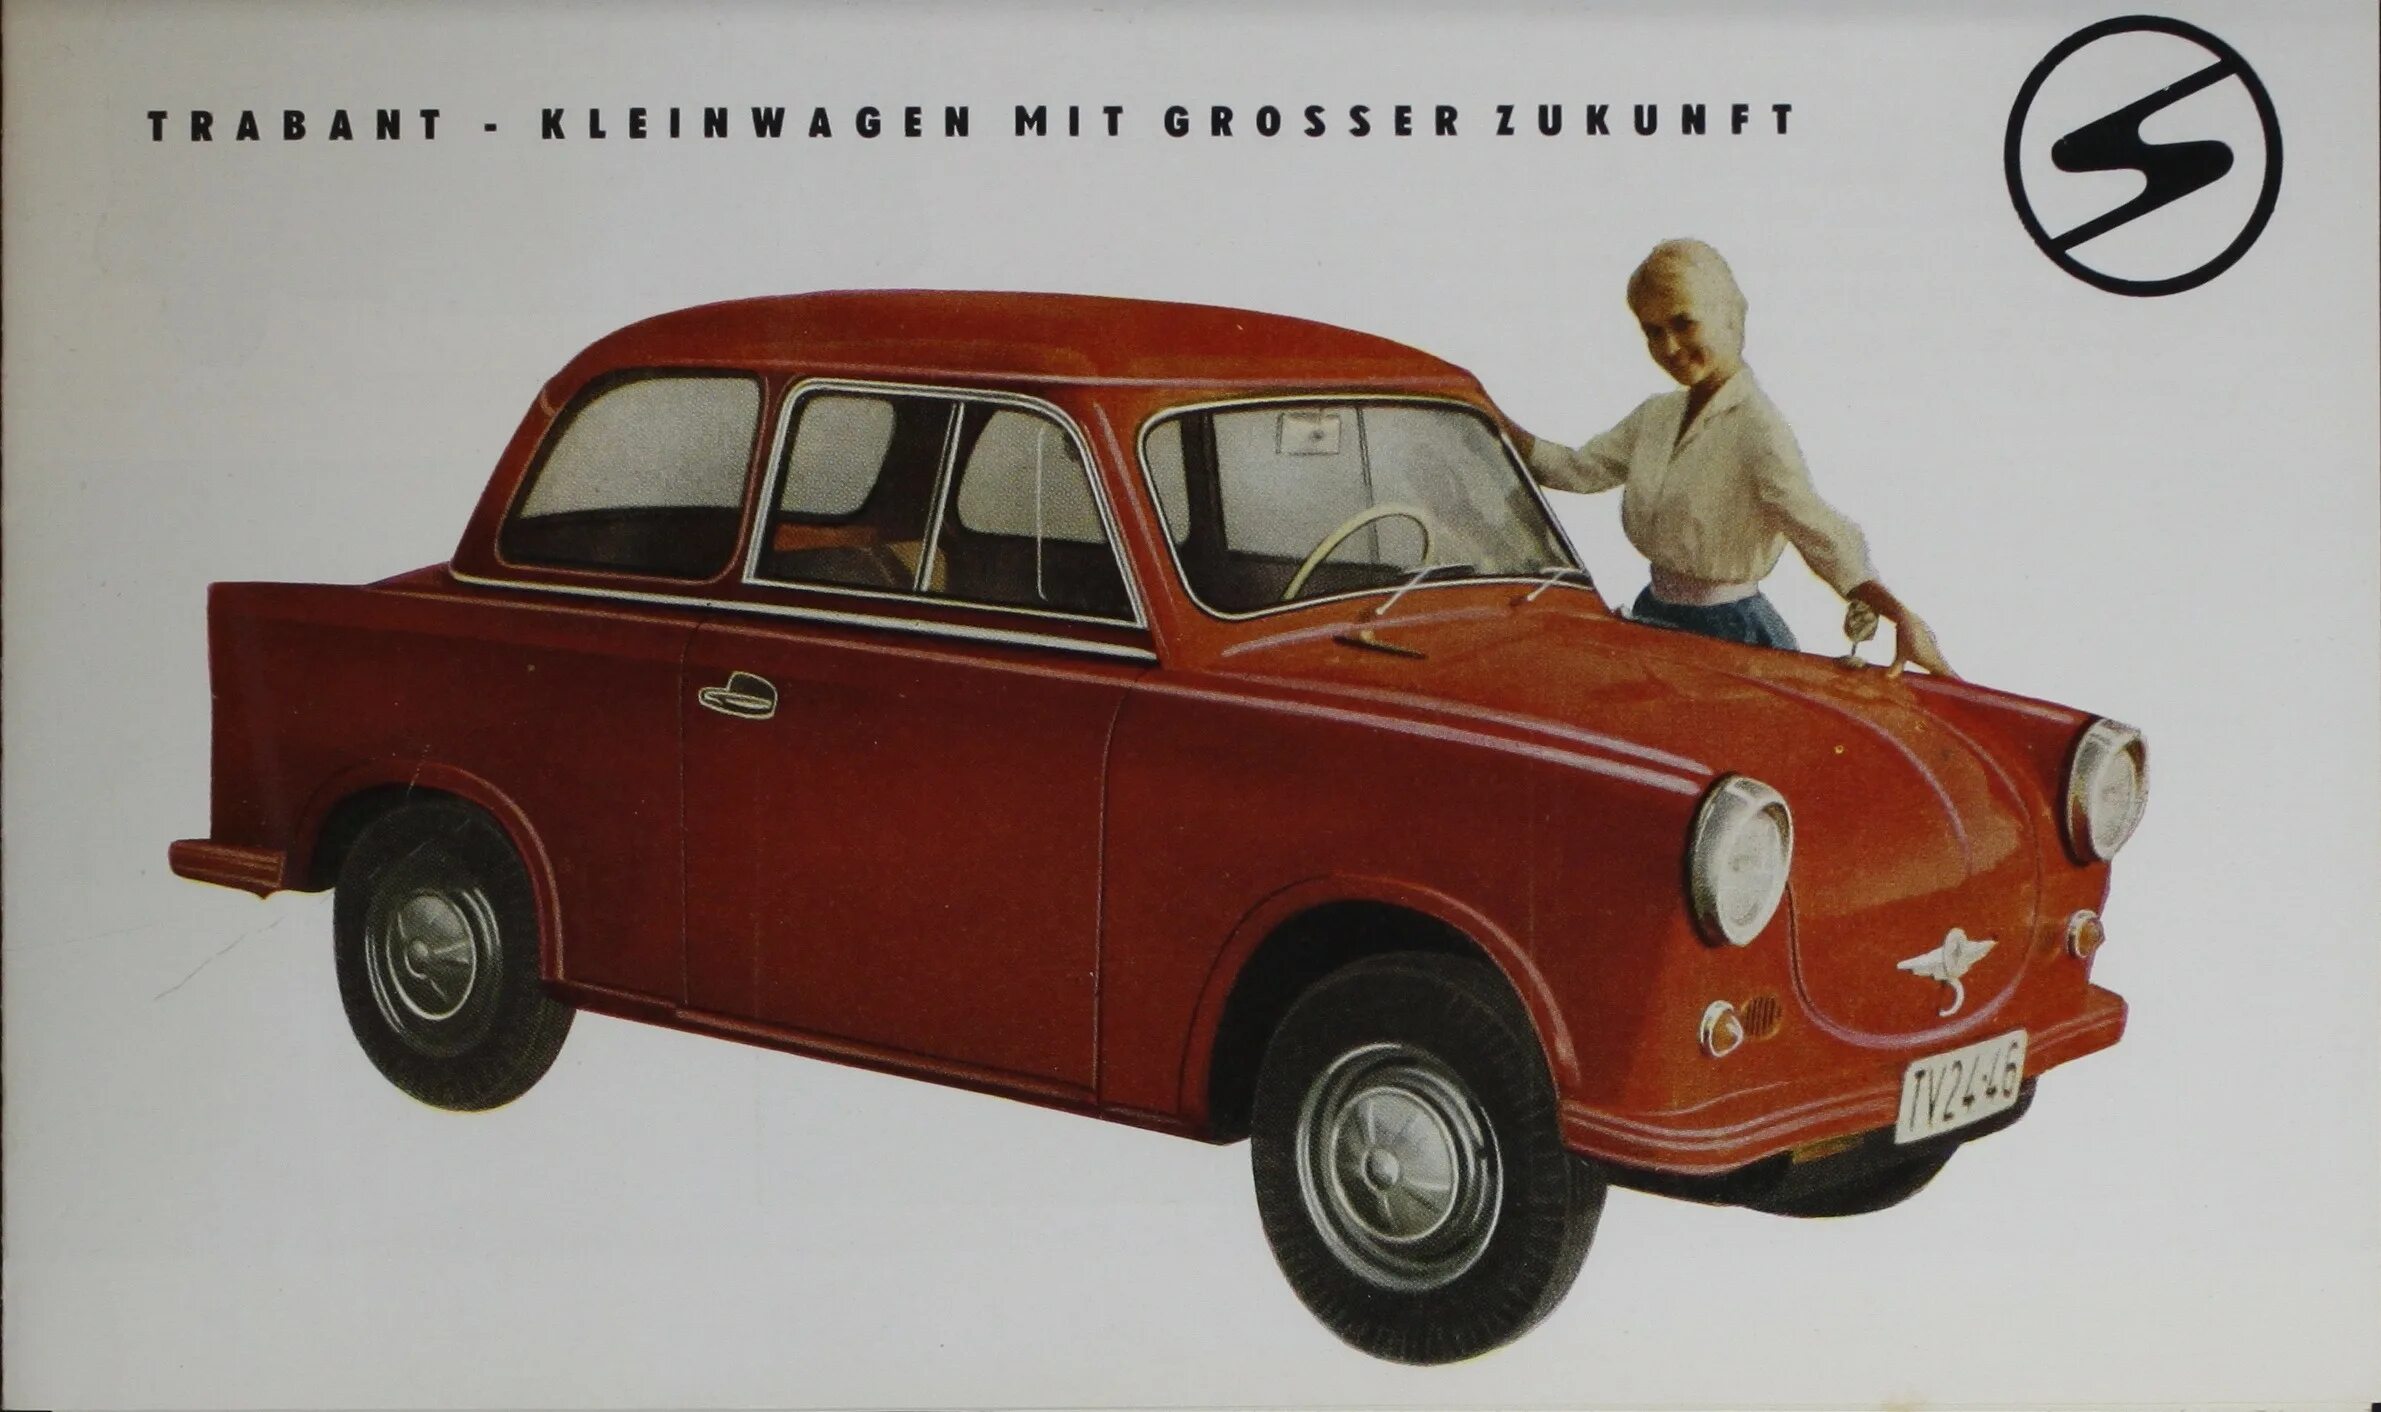 Гдр прототип нечаева. Трабант 1957. Трабант автомобиль. Автопром ГДР. Автомобильная промышленность ГДР.